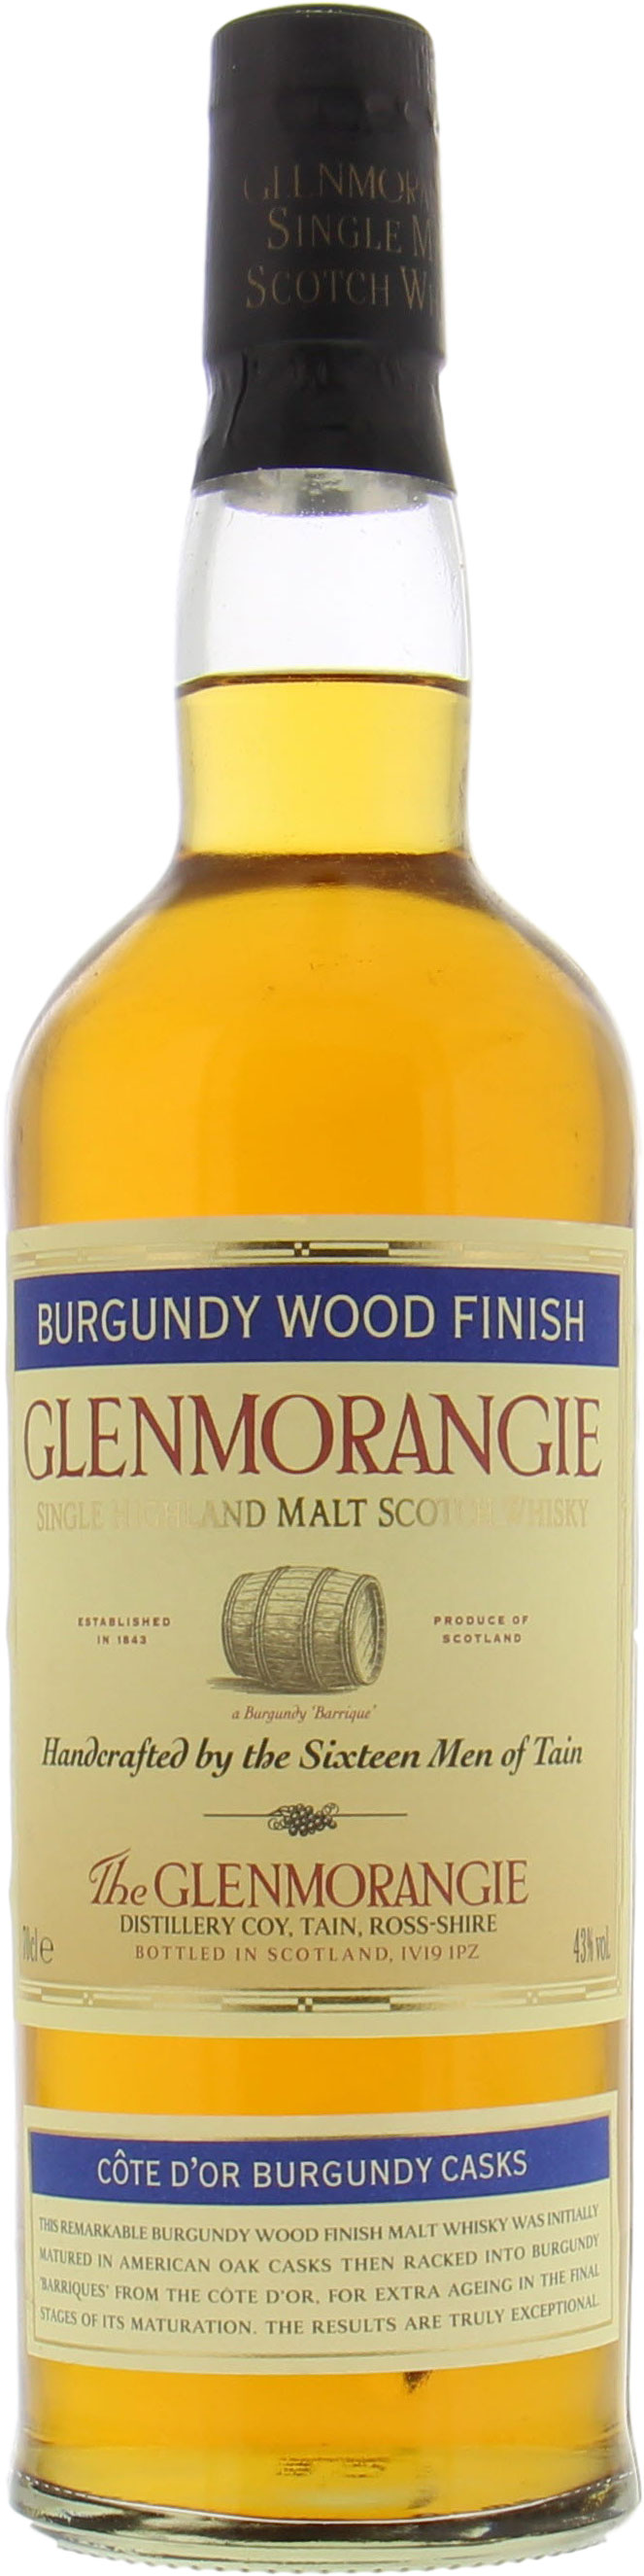 Glenmorangie - Burgundy Wood Finish 43% nv No Original Container Included